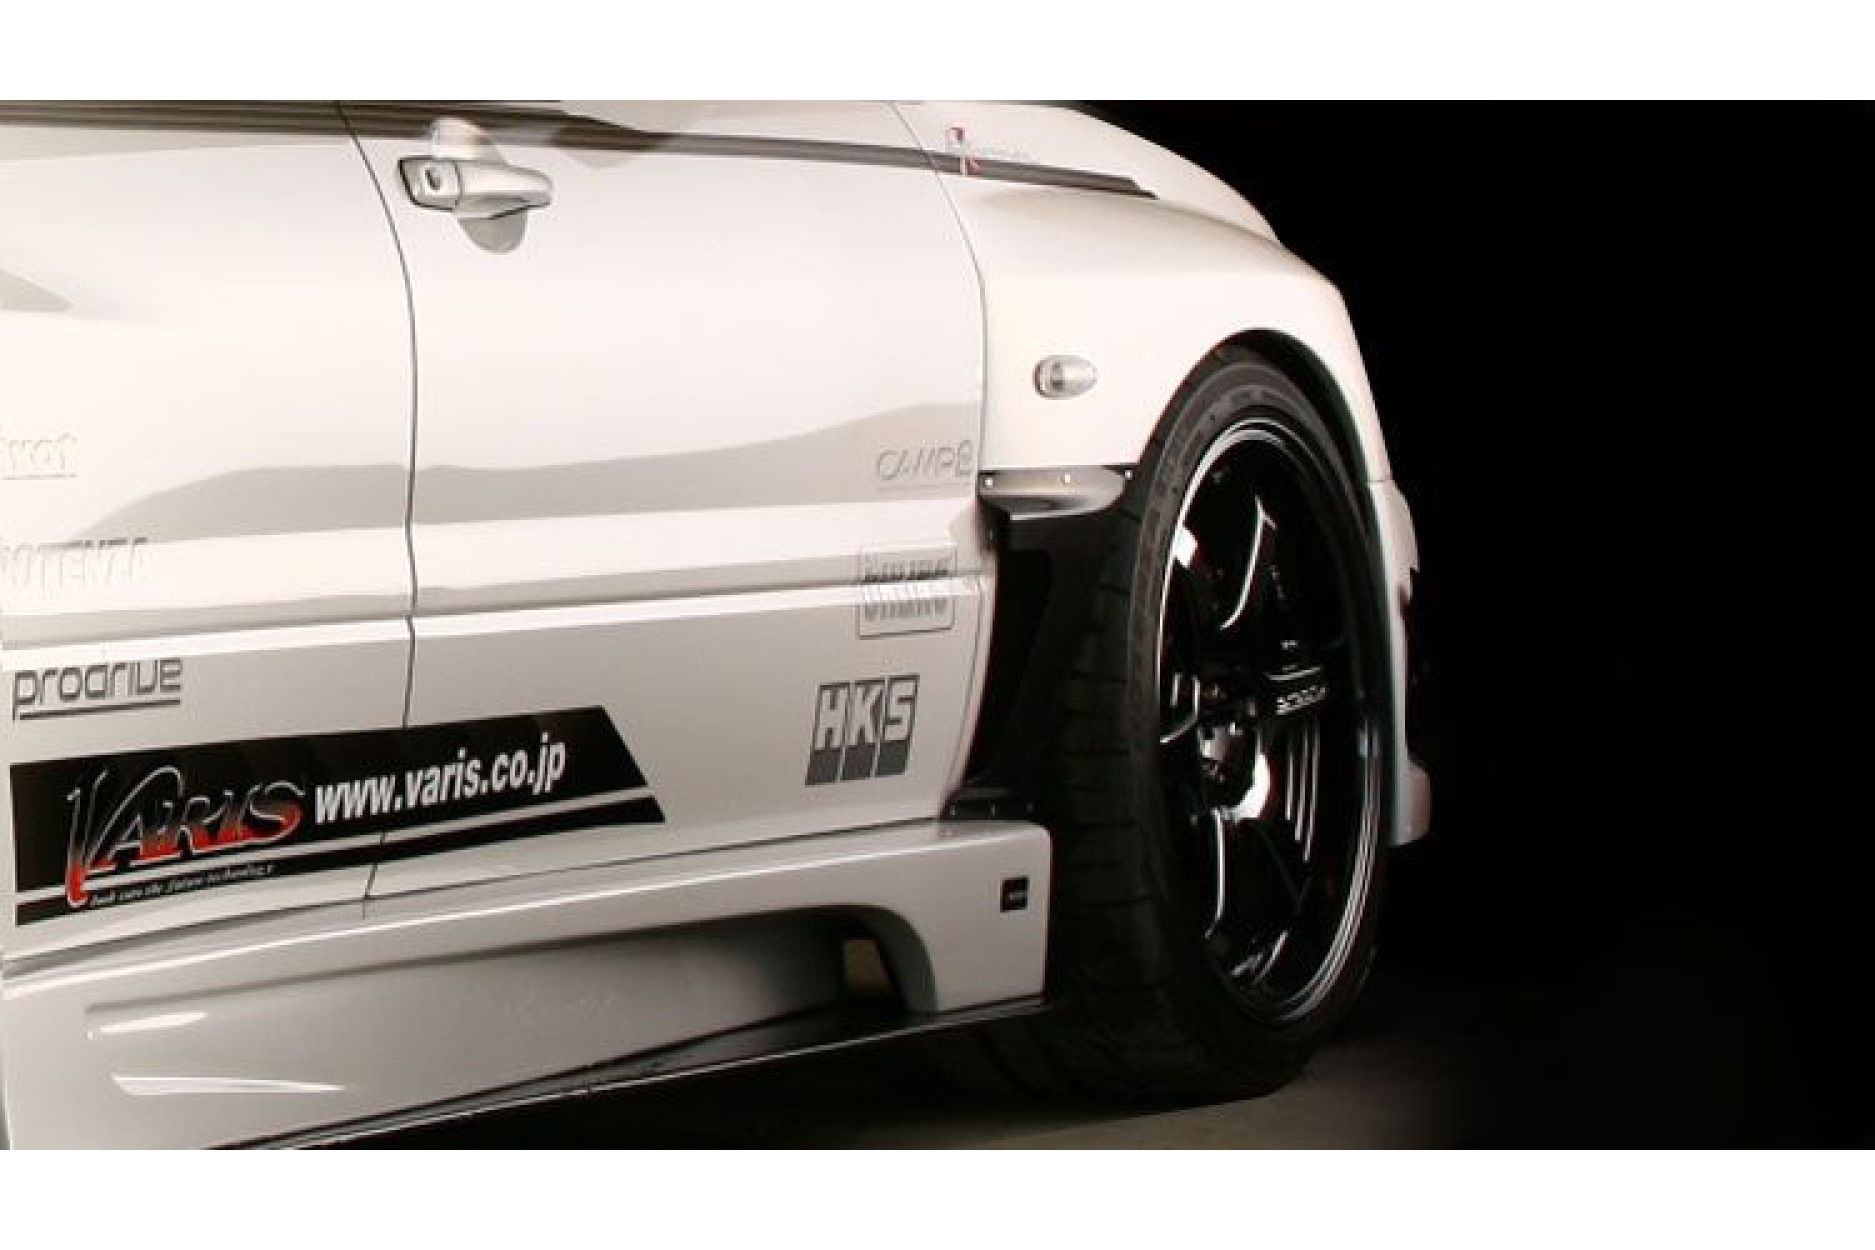 Varis carbon Side Air panel for Mitsubishi Lancer Evo 9